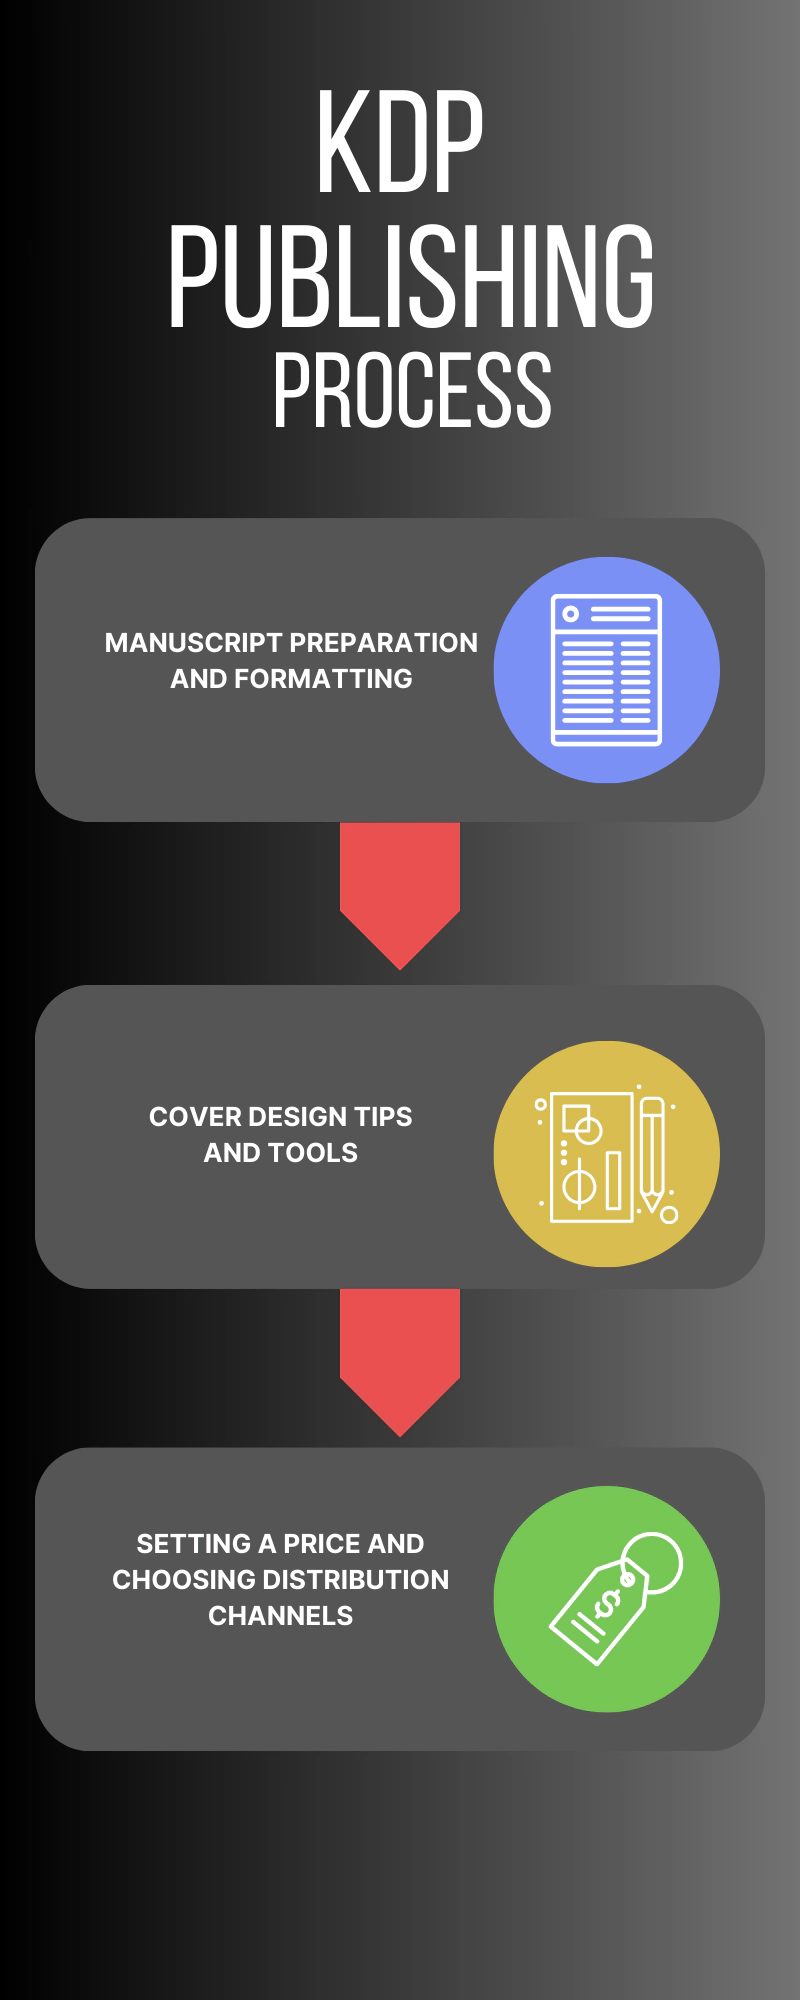 KDP Publishing Process Infographic